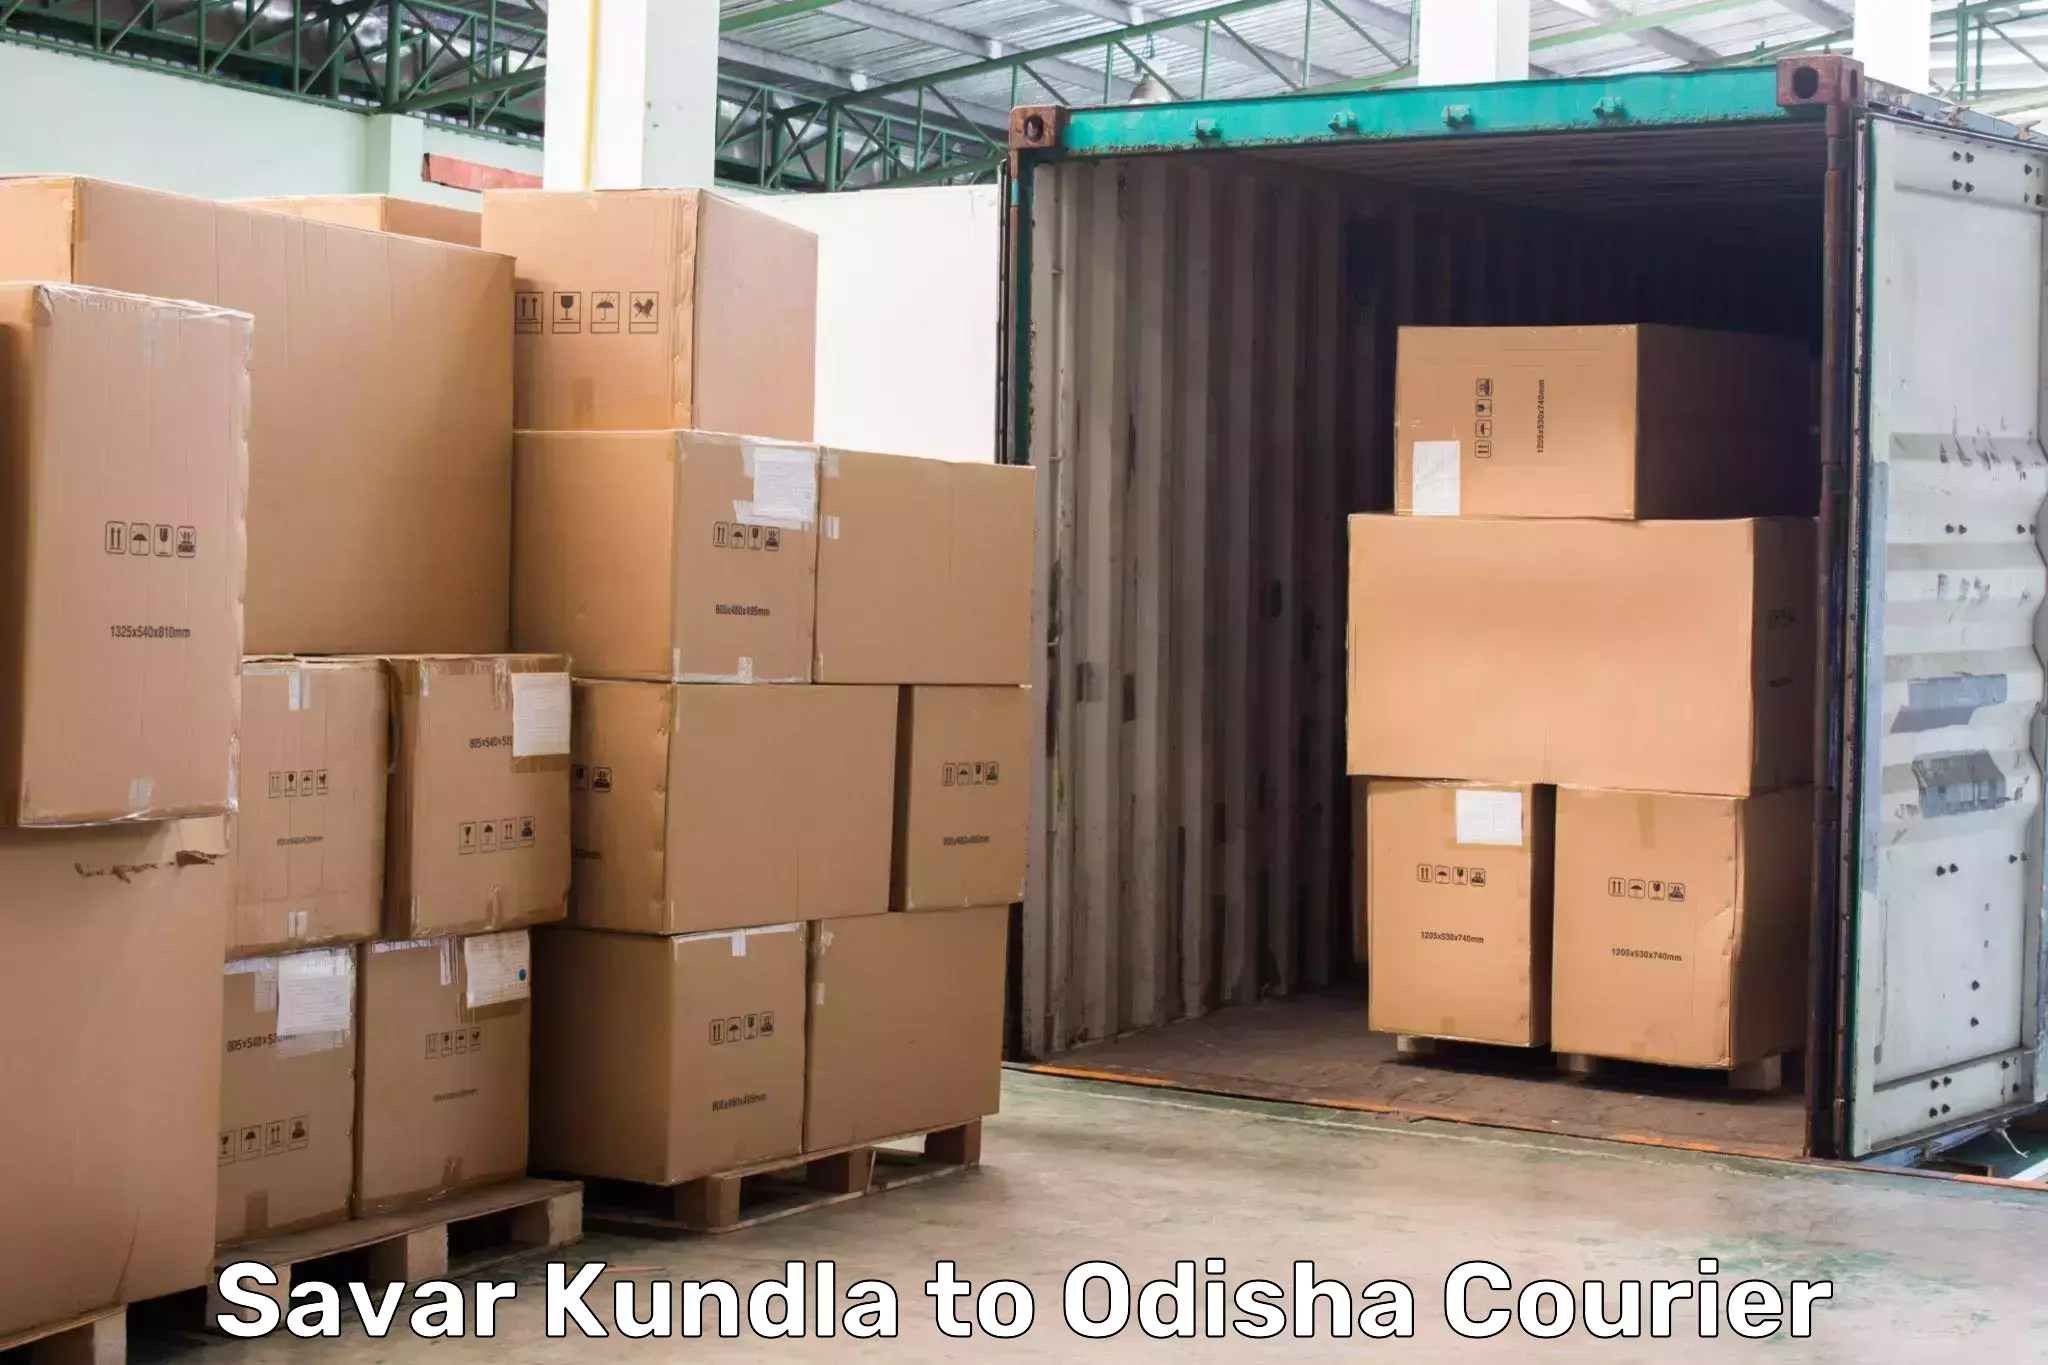 Reliable delivery network Savar Kundla to Nirakarpur